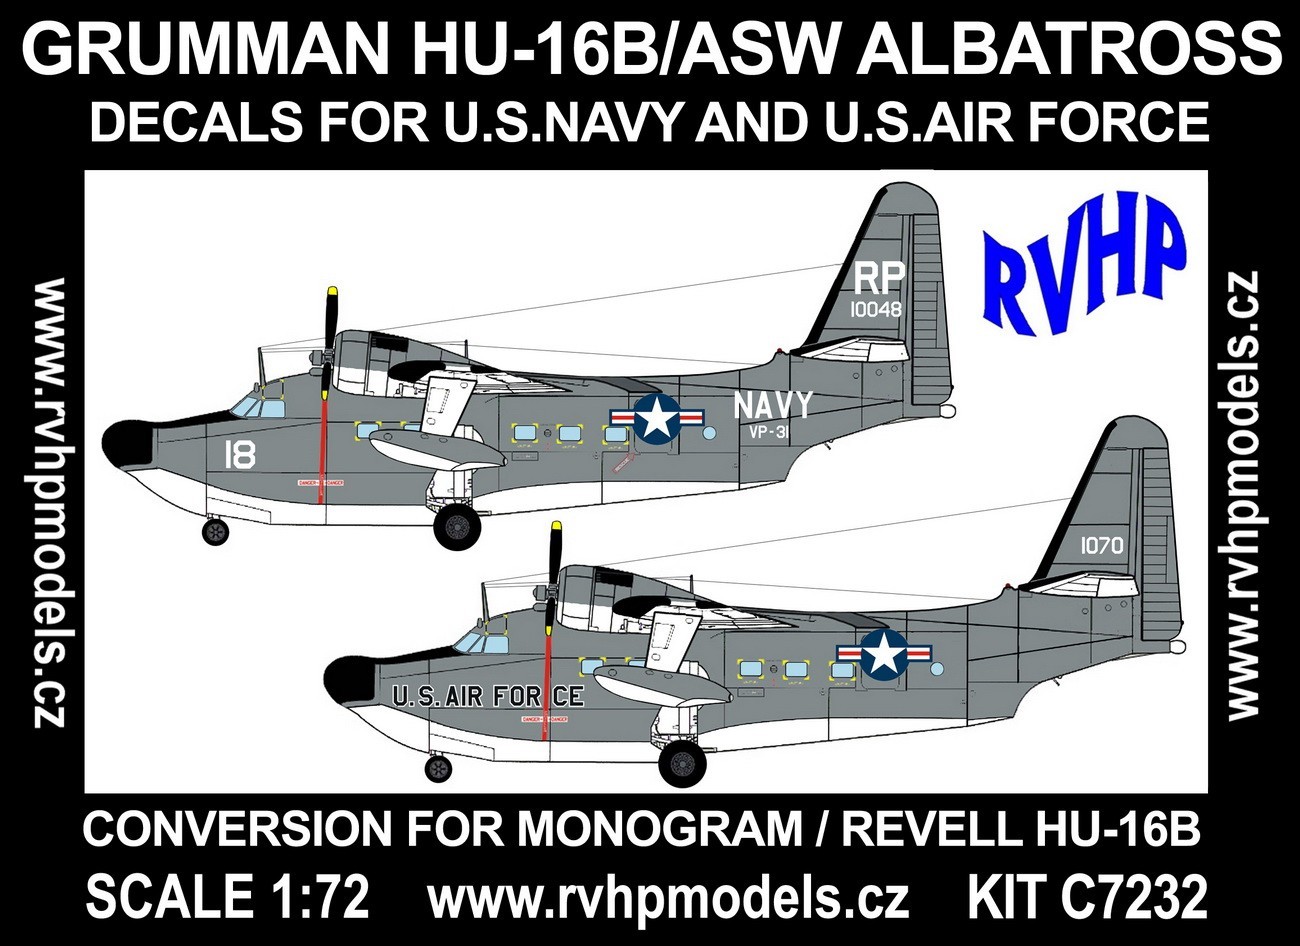 Accessoires - Grumman HU-16B Albatross ASW (USN + USAF) (conçu pour êt